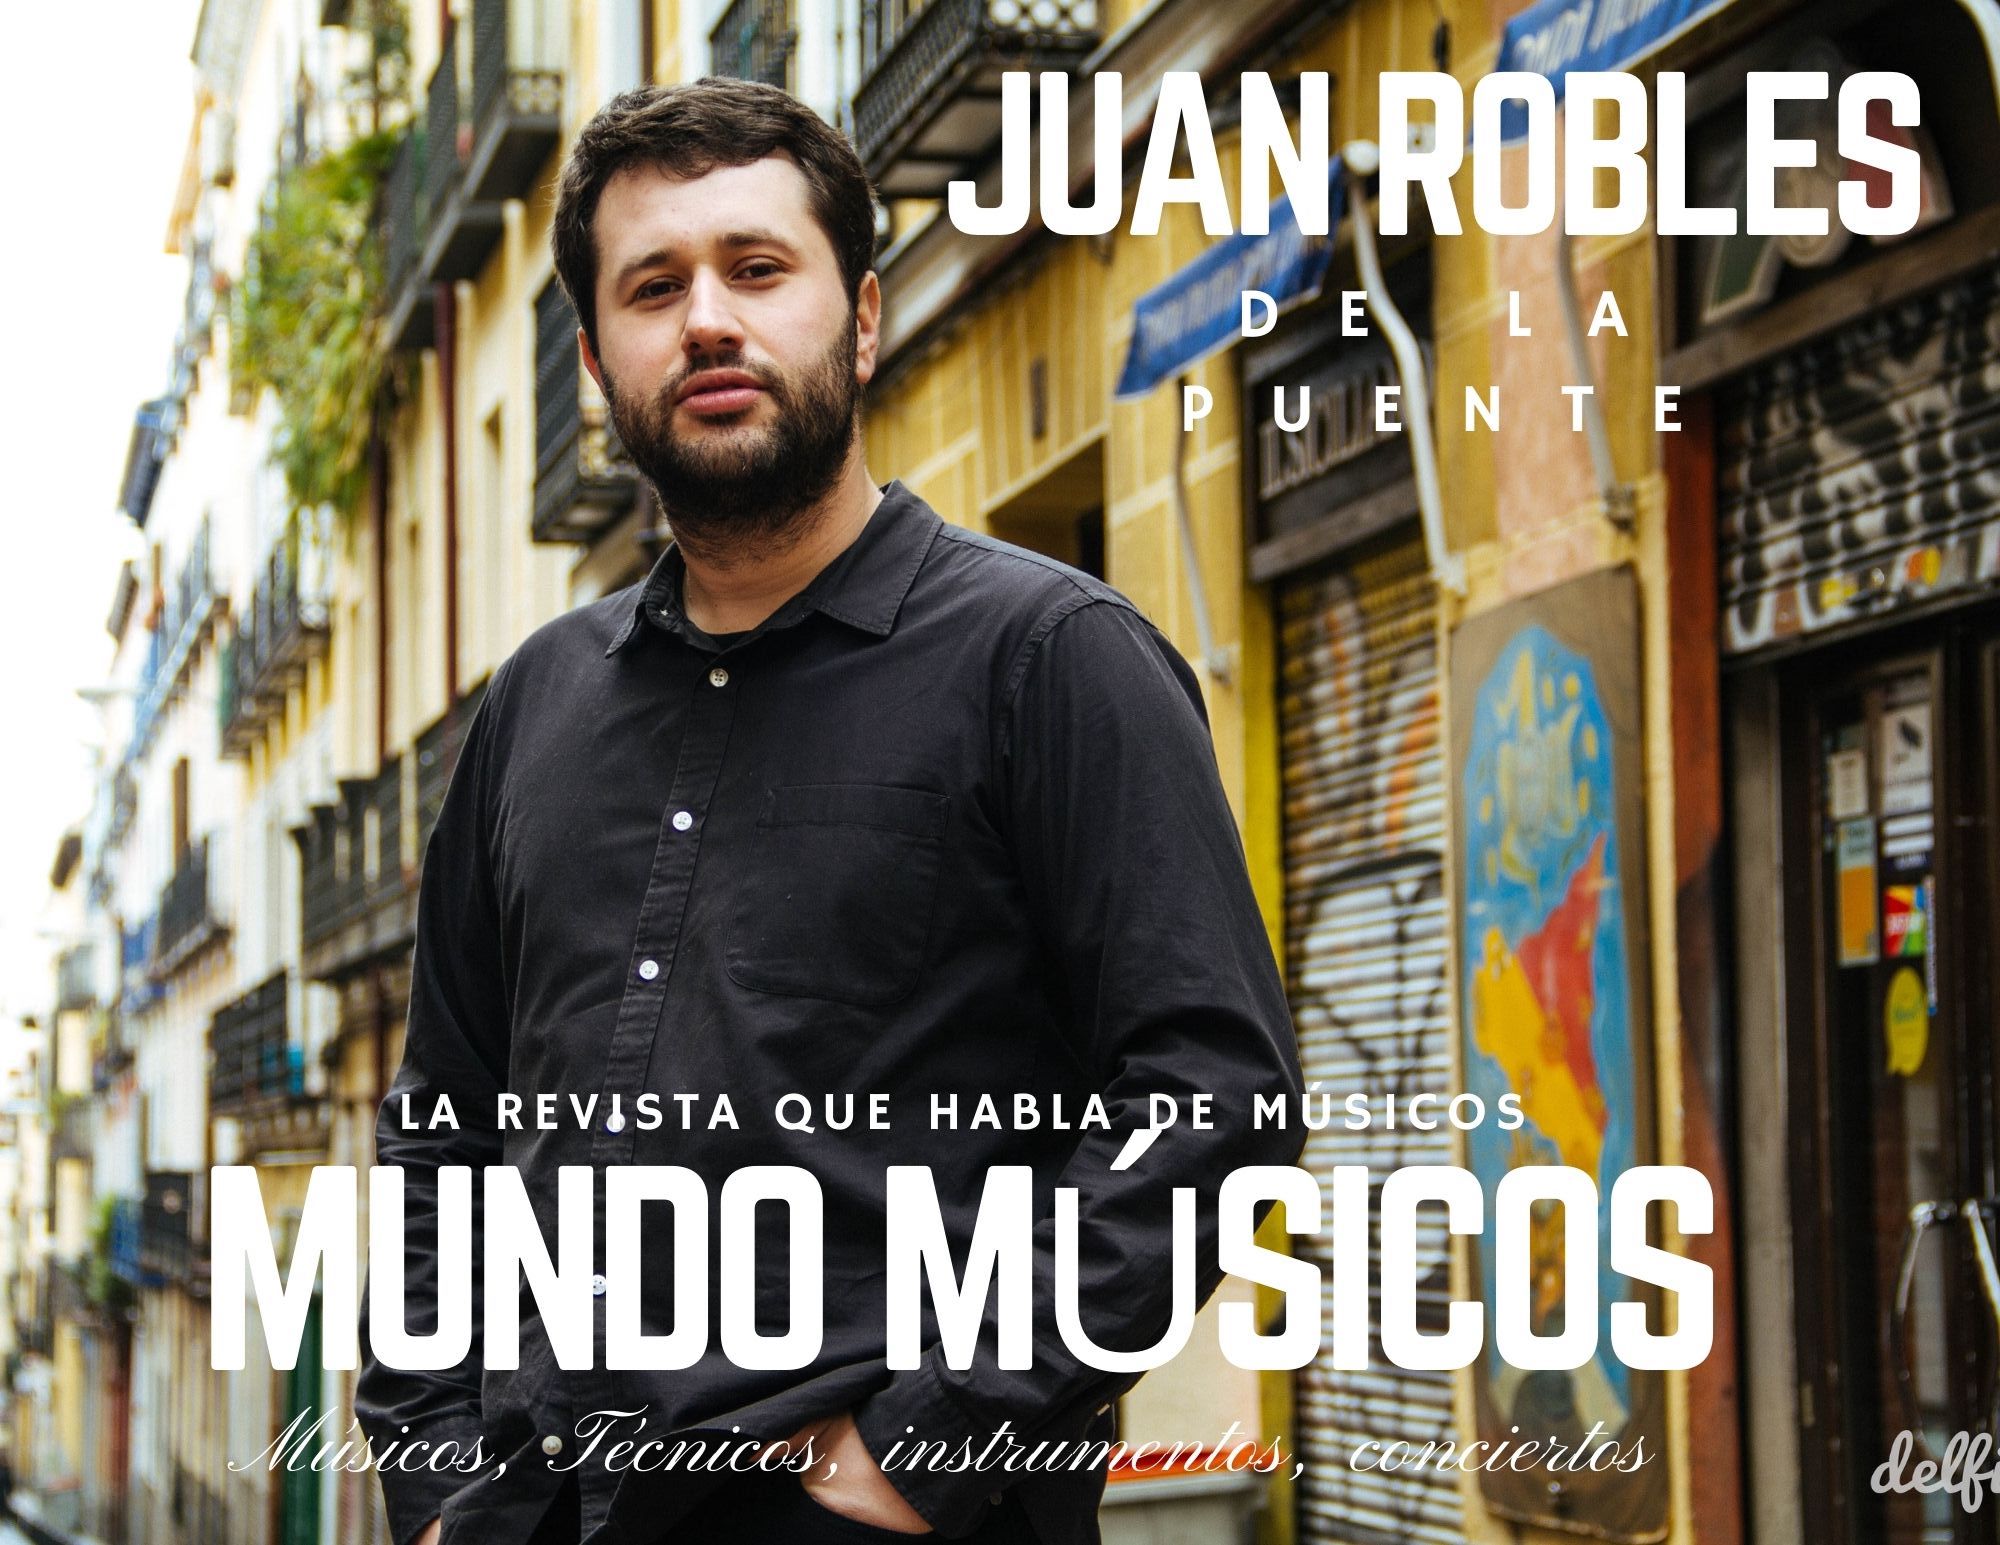 Juan robles músico